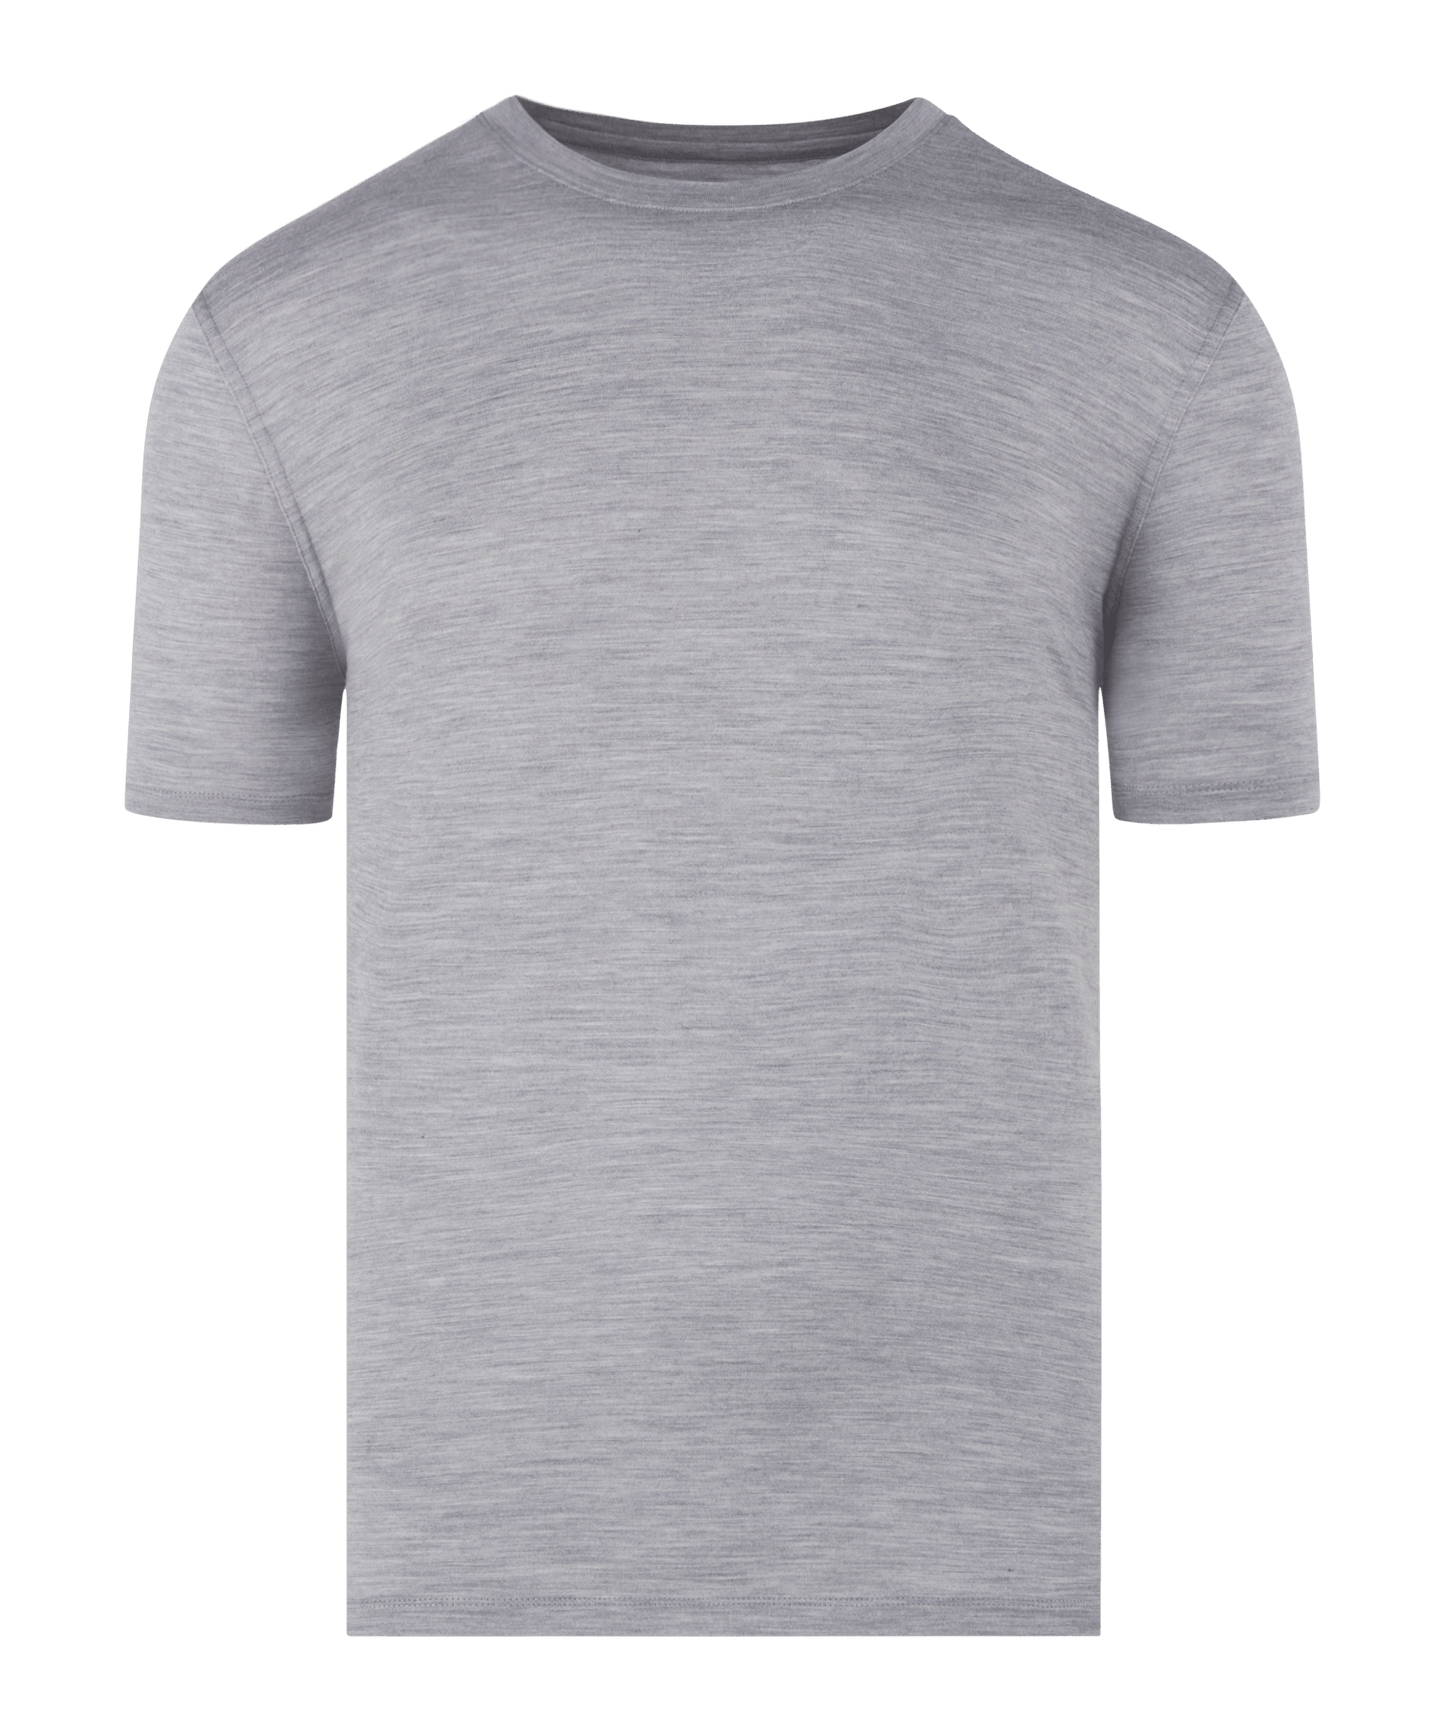 T-shirt merinowol grijs